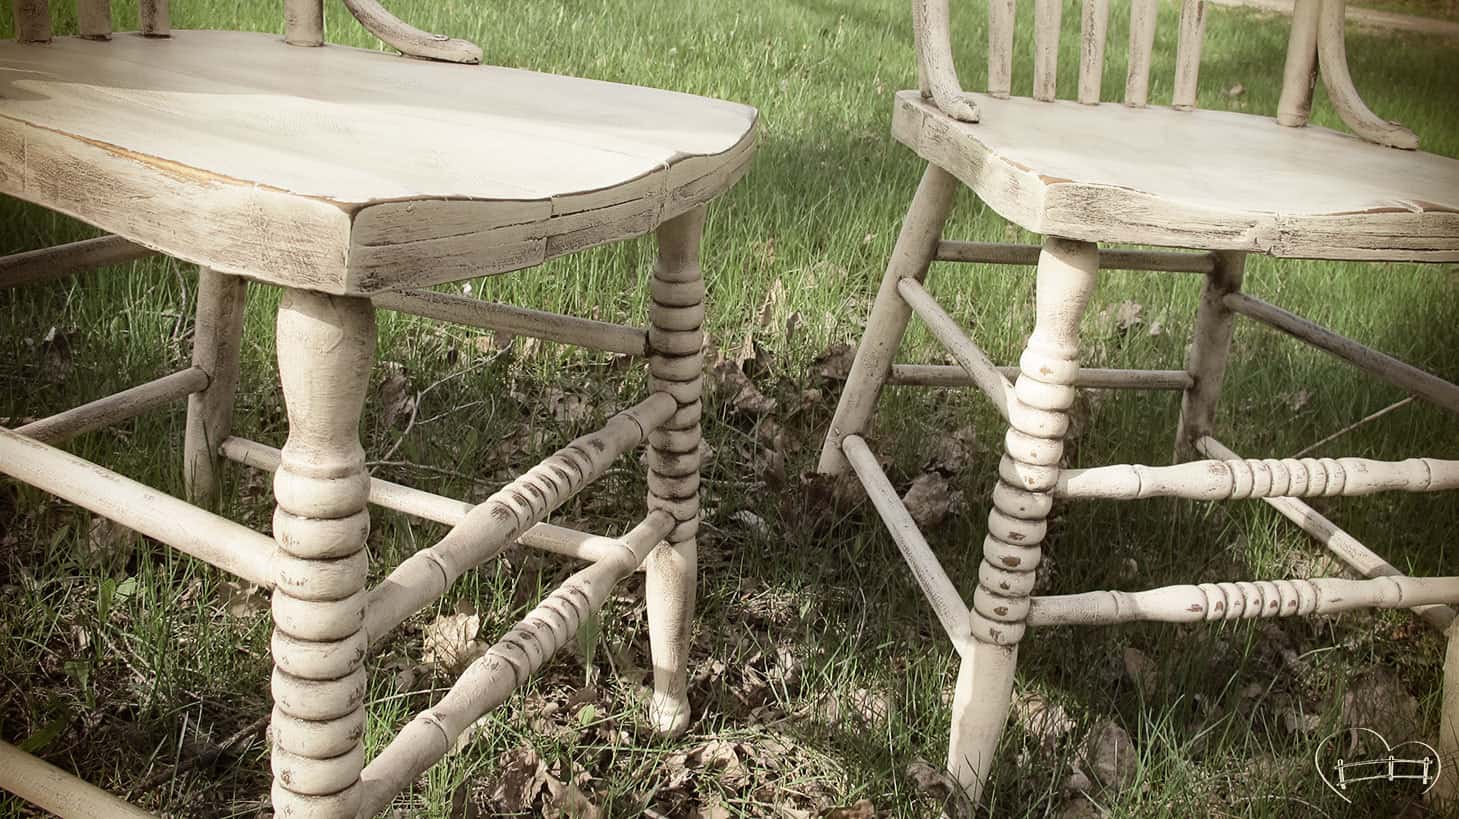 2 Pressback's Chic'd for YOU! #DIY #furniturepaint #paintedfurniture #pressback #chair #white #antique #chalkpaint #homedecor #farmhouse #countrychicpaint - blog.countrychicpaint.com